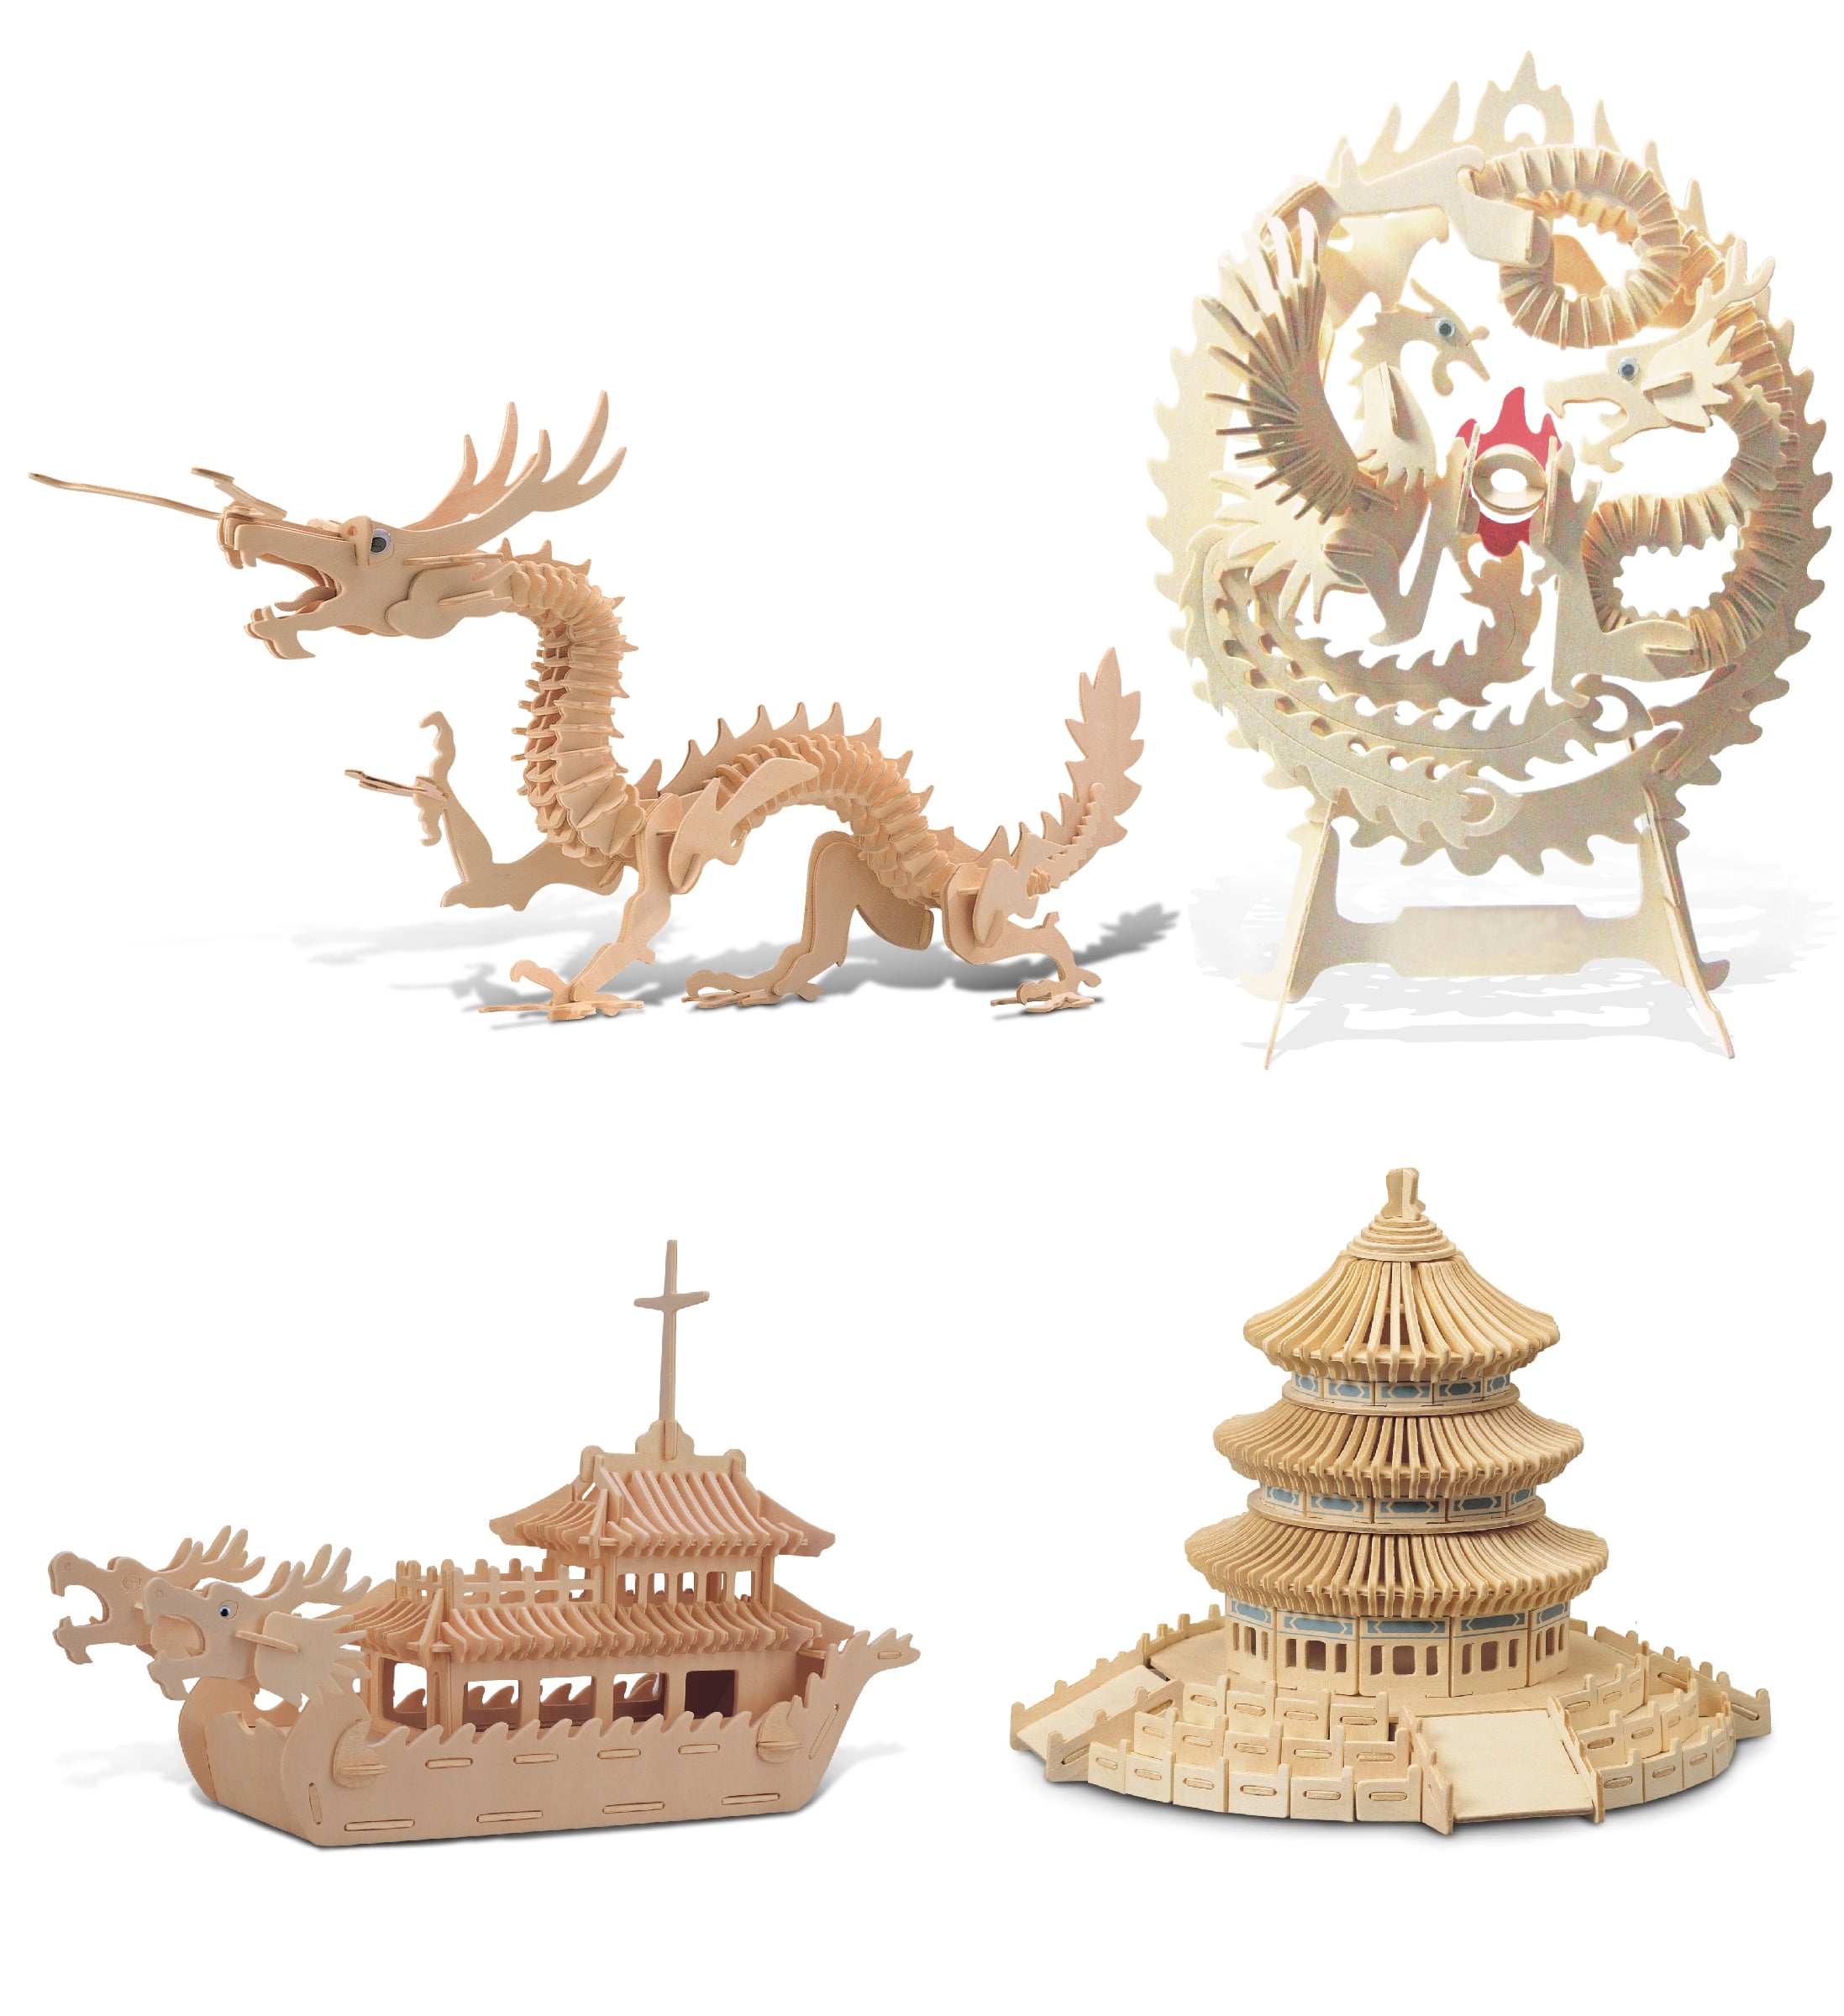 Dragon Boat 3D Wood Construction Puzzle 